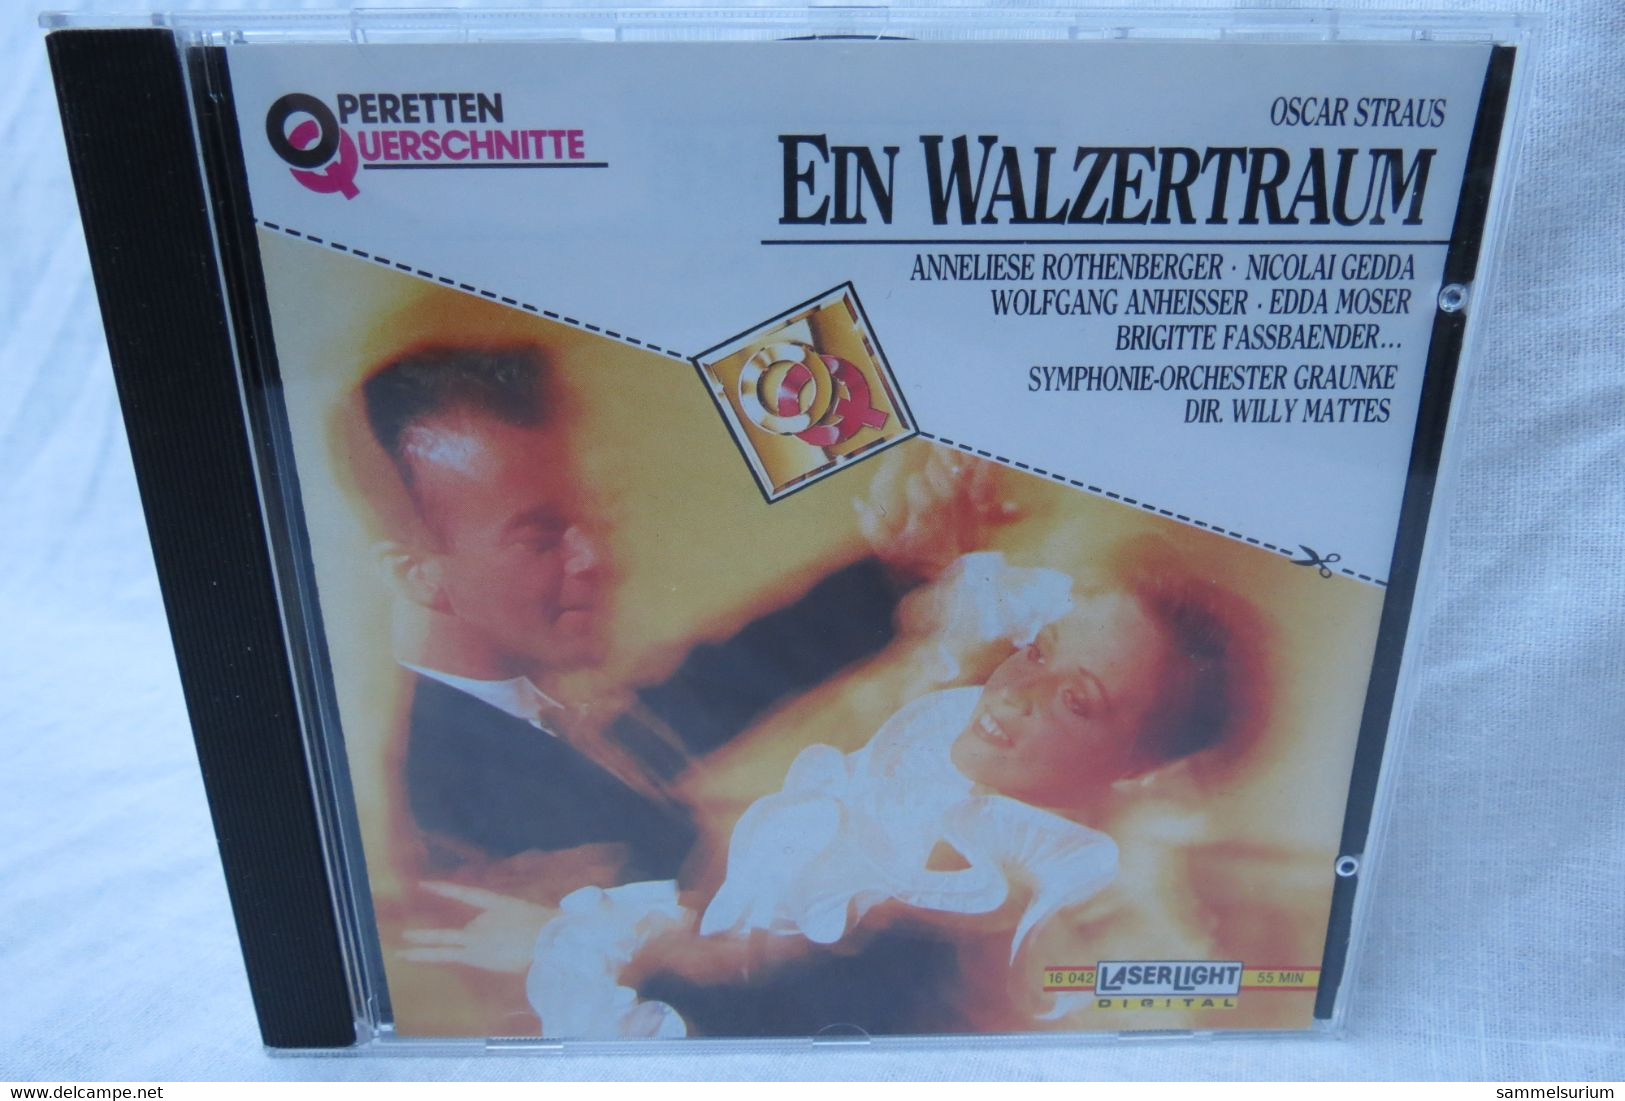 CD "Oscar Straus" Ein Walzertraum Aus Der Reihe Operetten Querschnitte - Opéra & Opérette